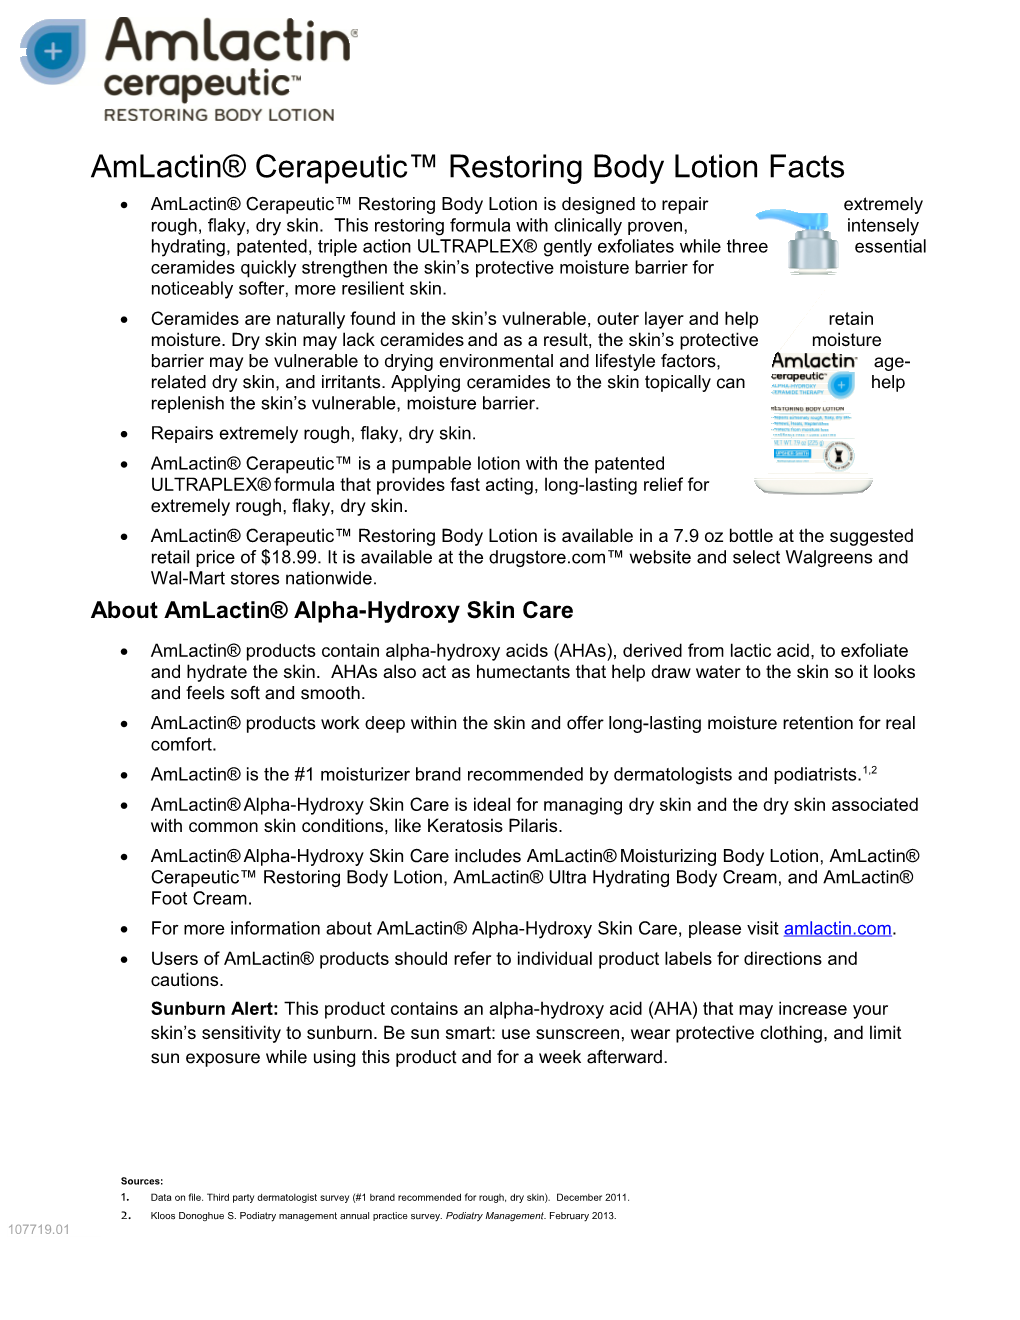 Amlactin Cerapeutic Restoring Body Lotion Facts